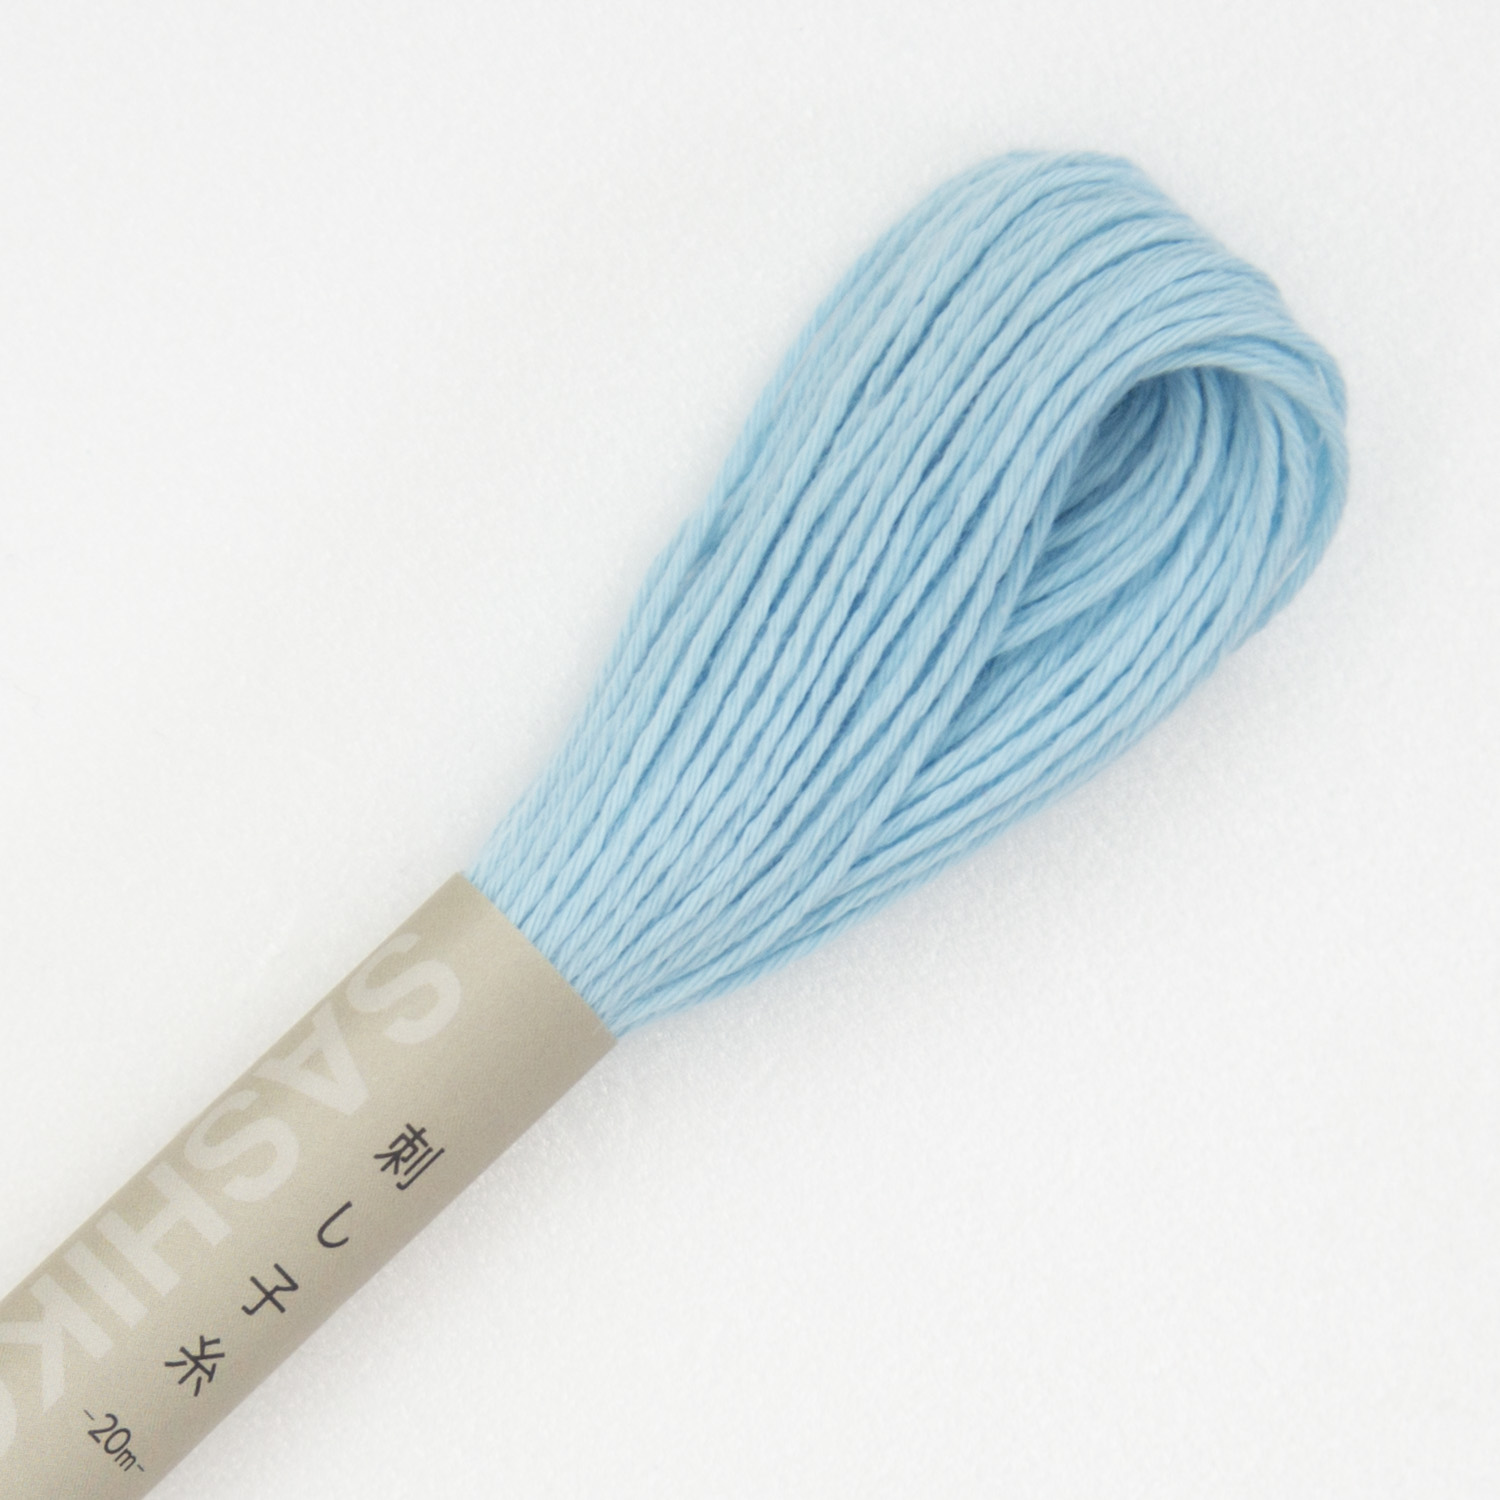 Olympus Sashiko Thread in Sky Blue - The Confident Stitch